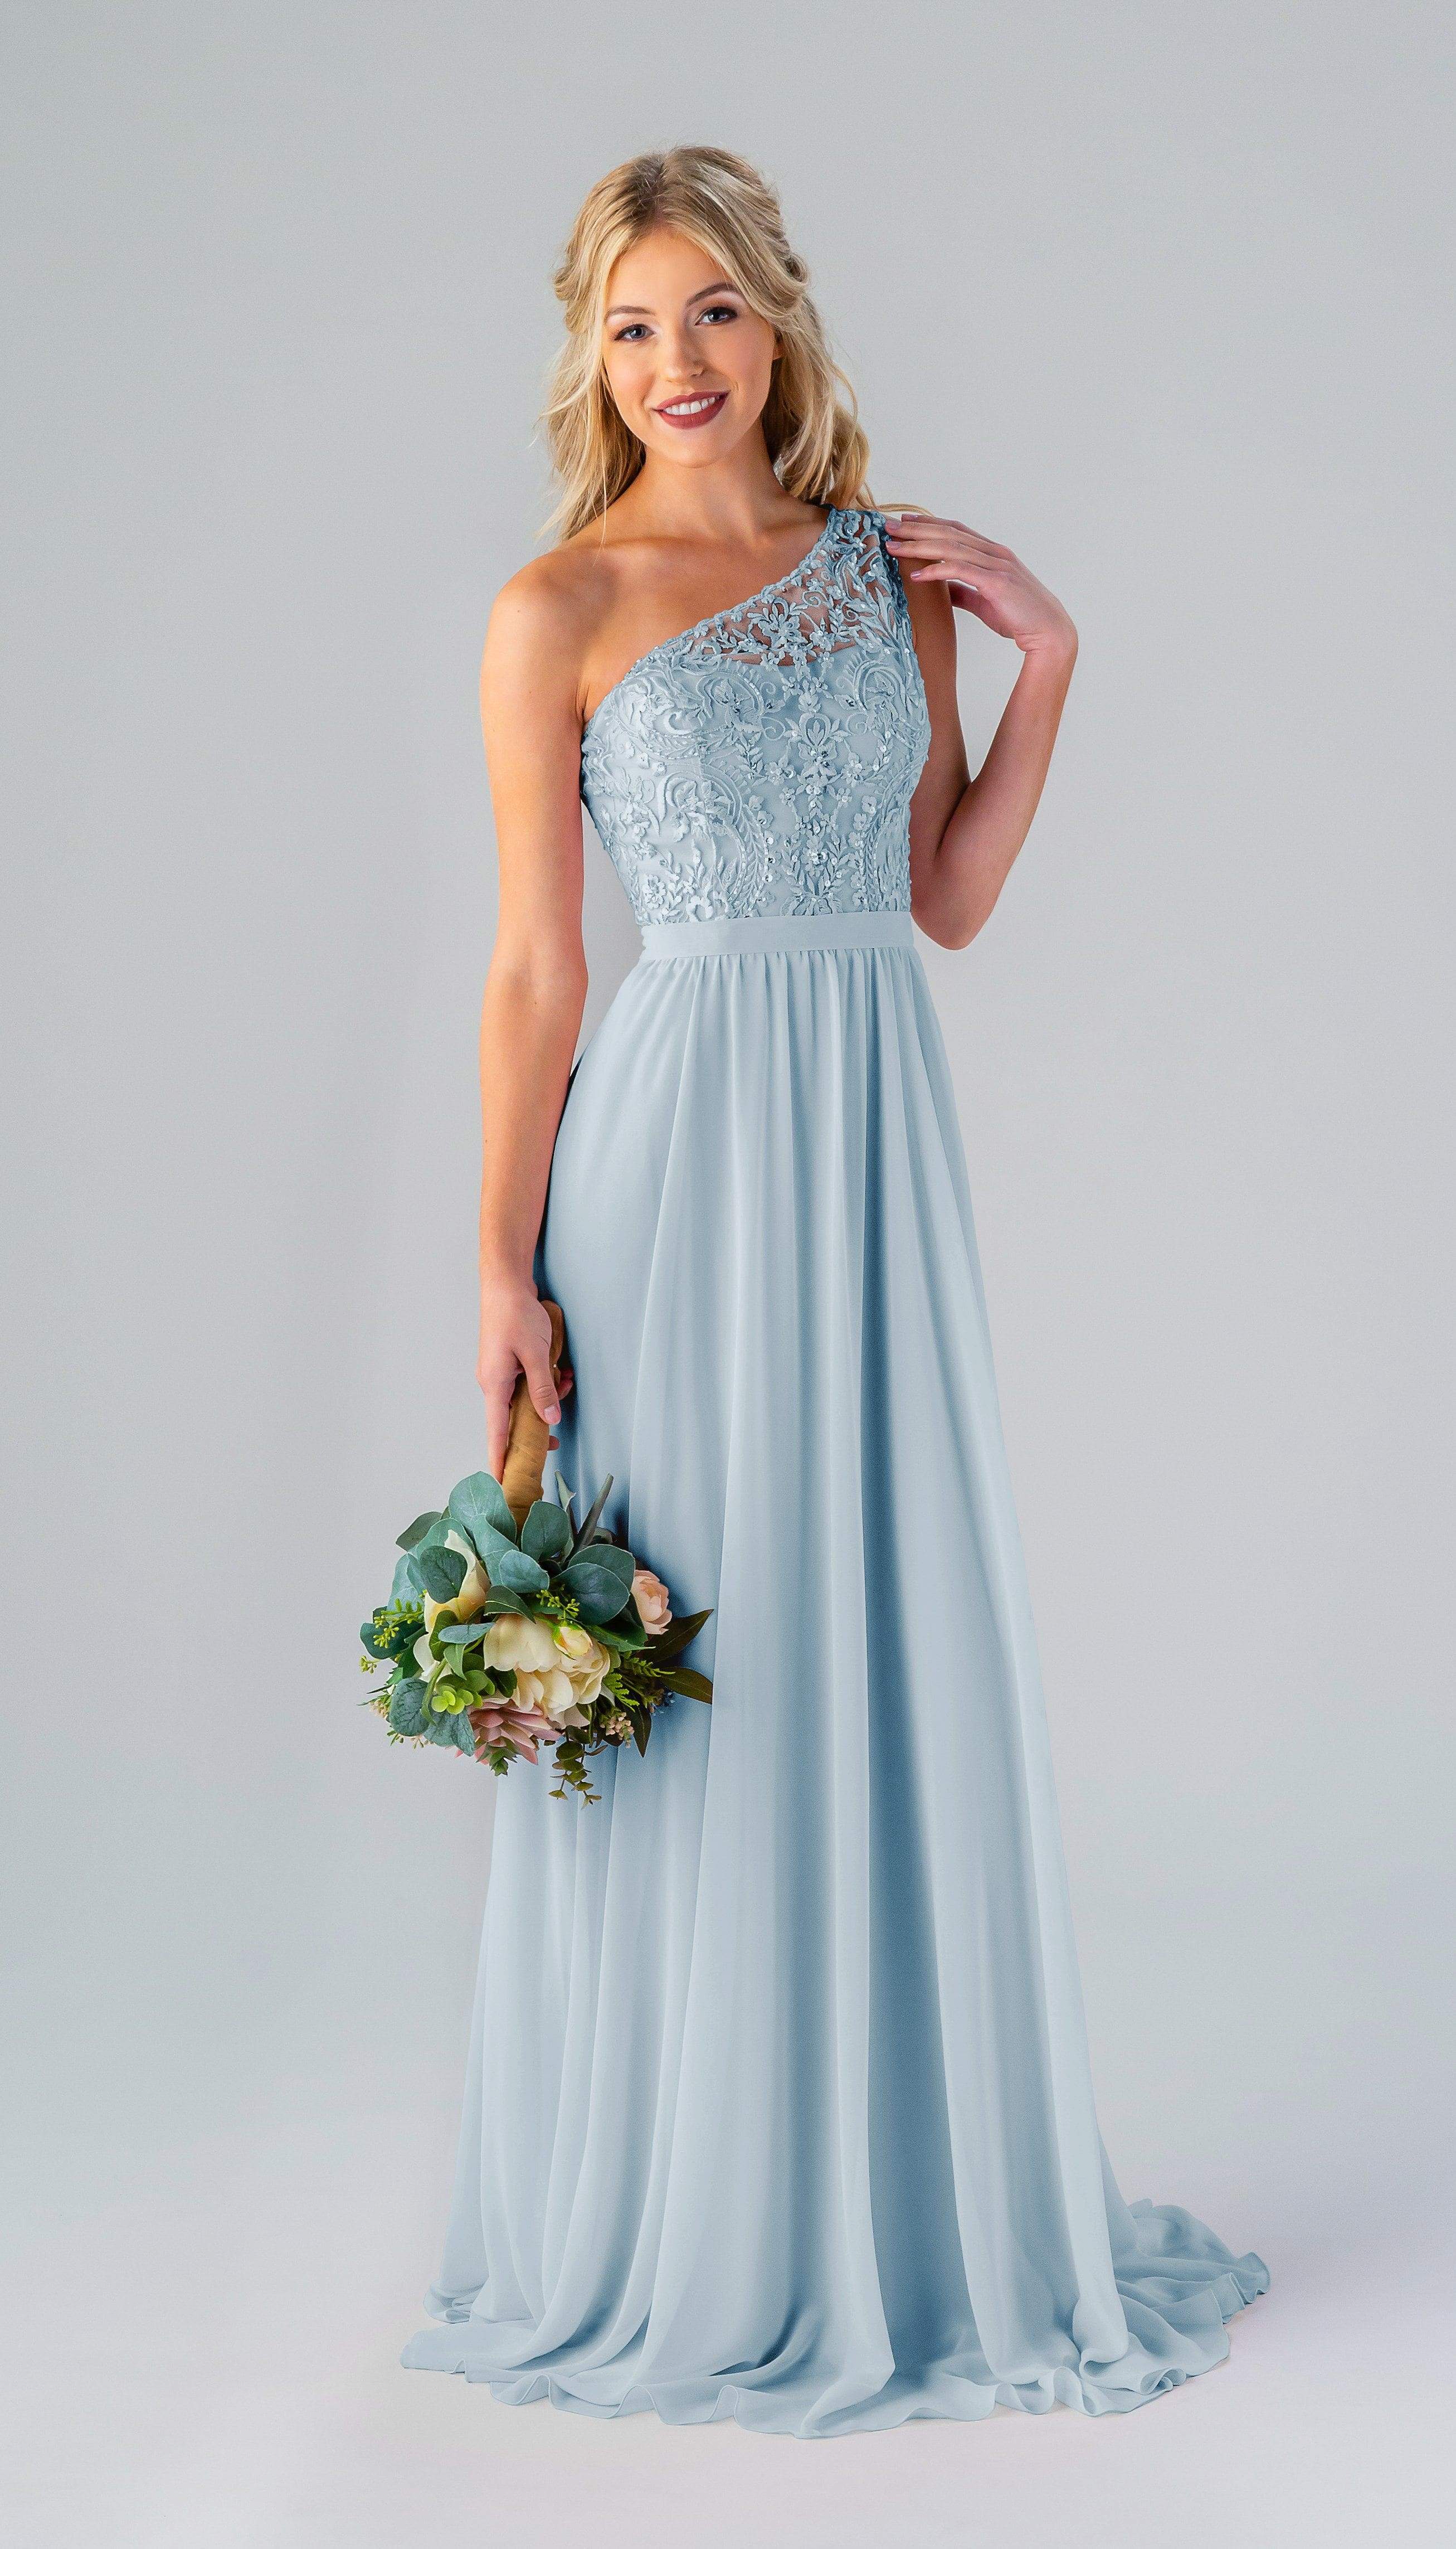 Bridesmaid Dresses: Shades of Blue